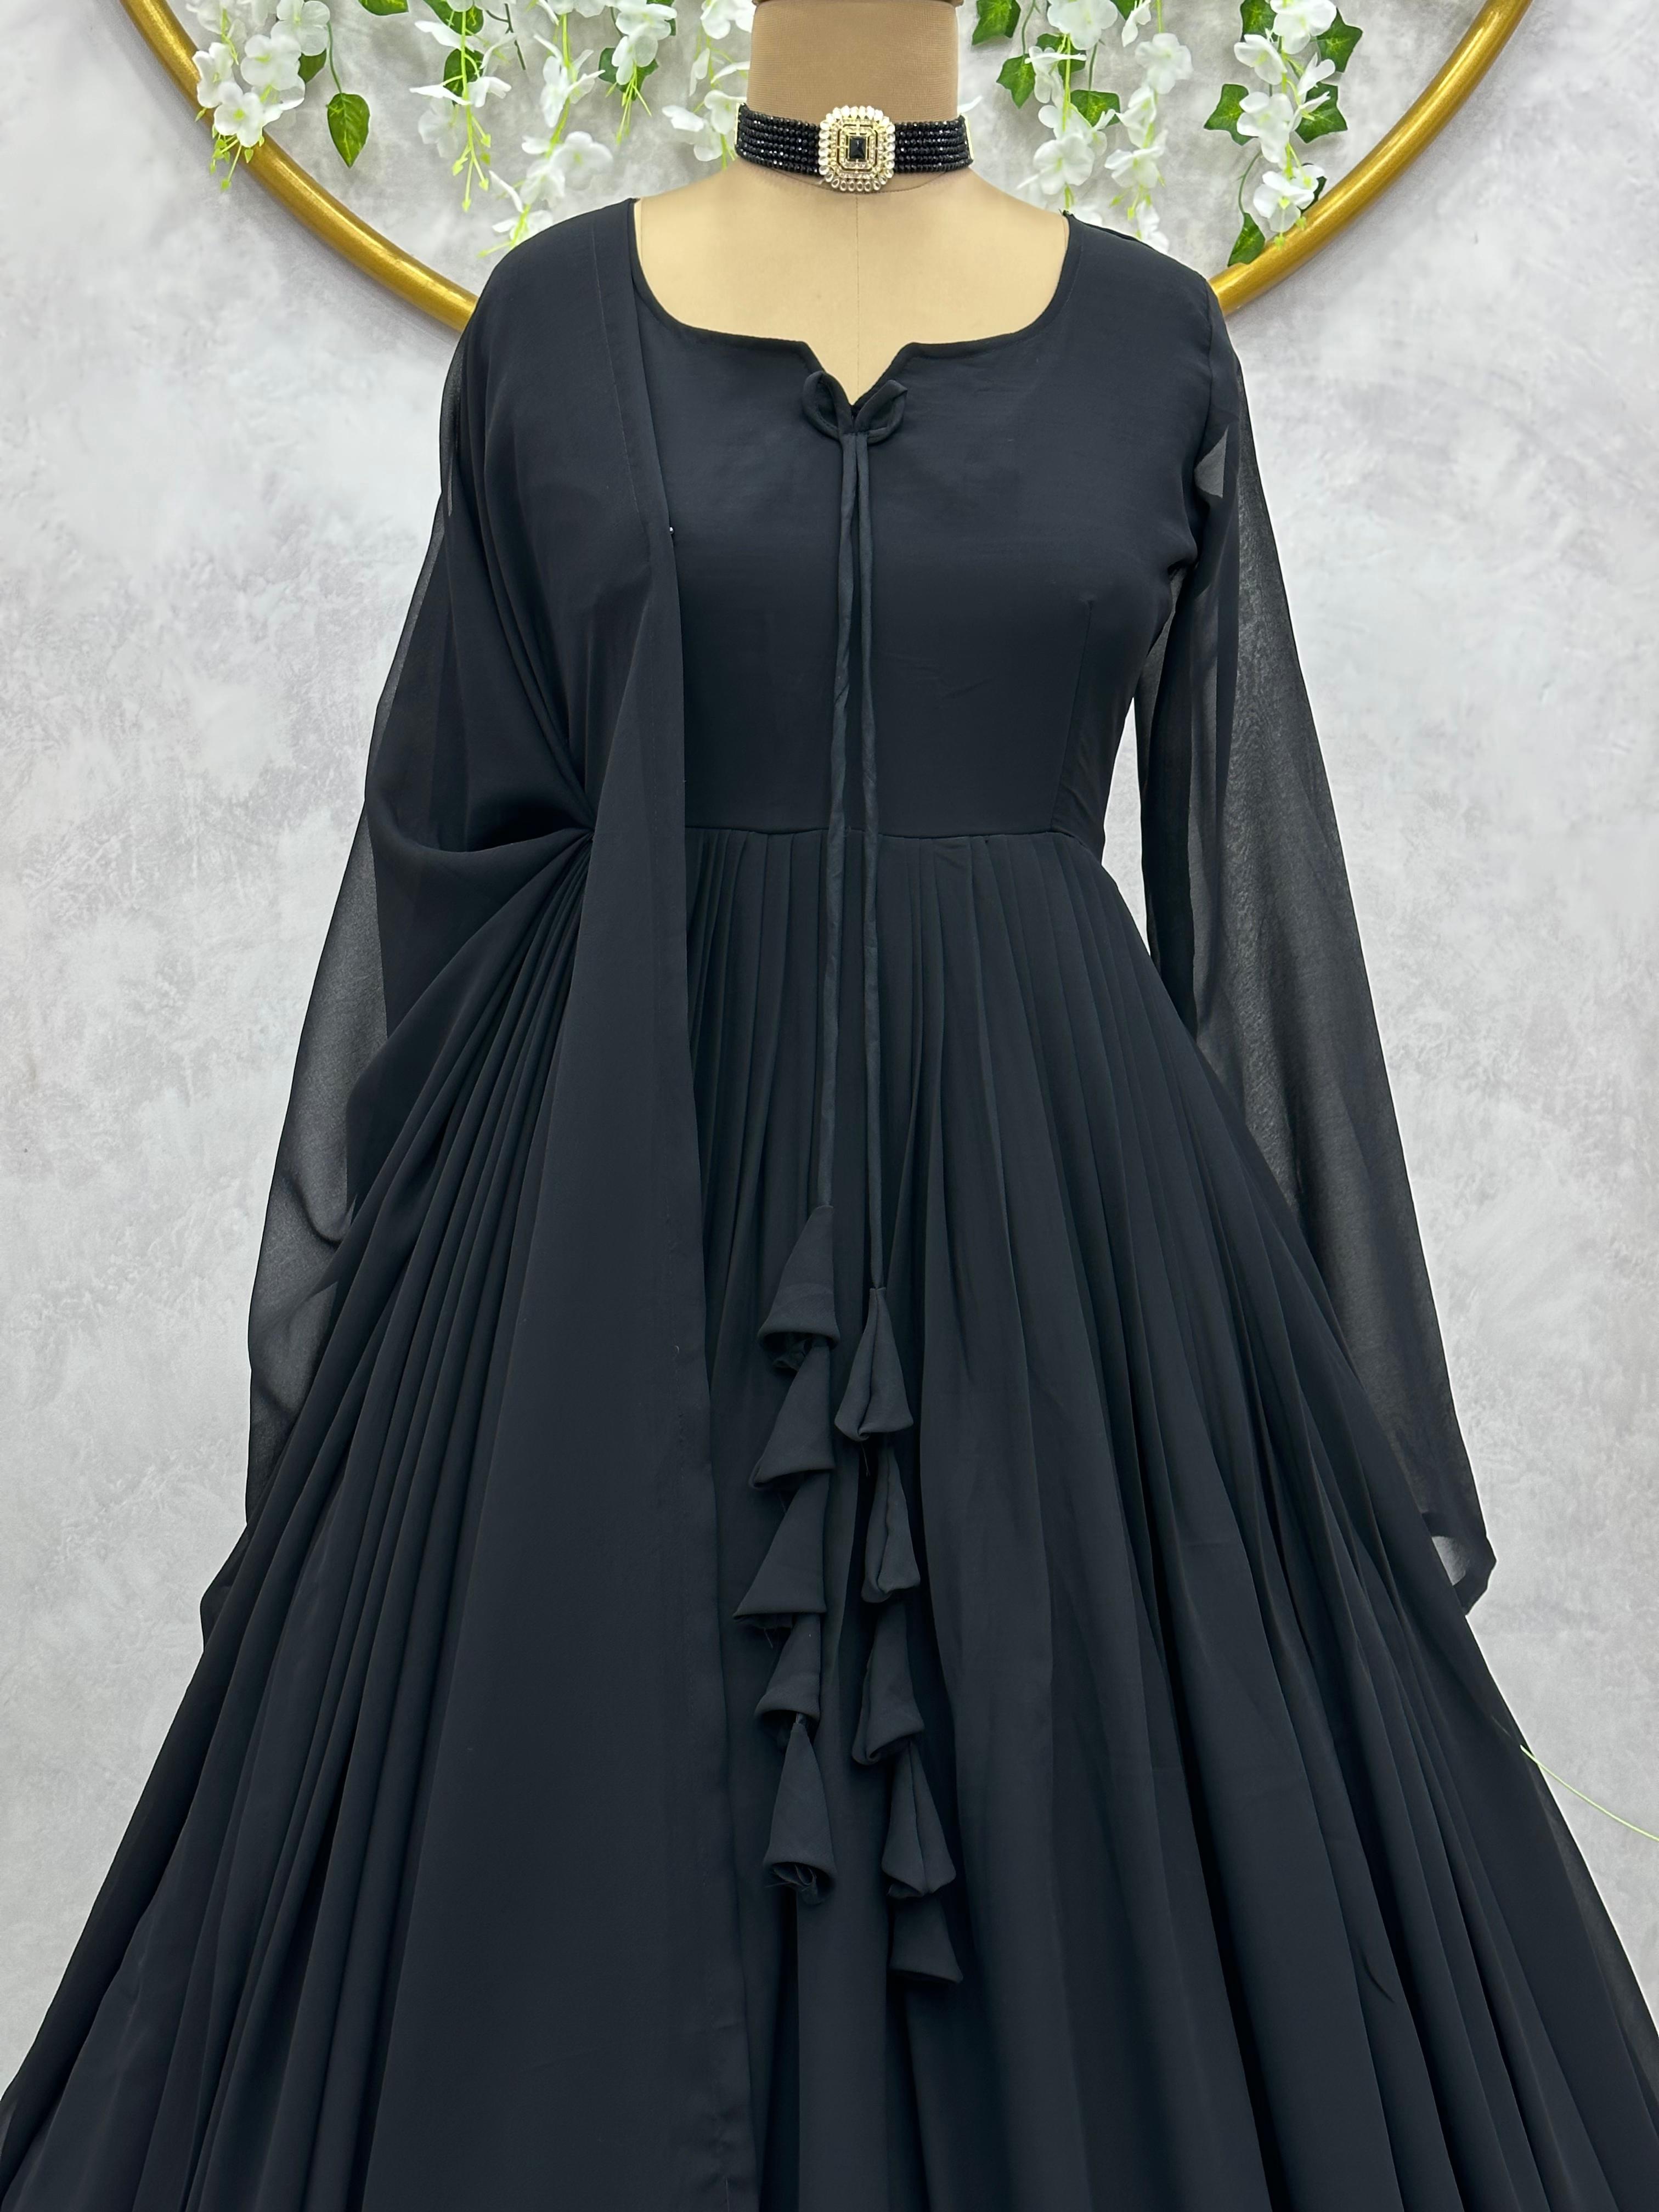 Top 10 Best Black Wedding Dress on Amazon - samanthamitchellphotos.com